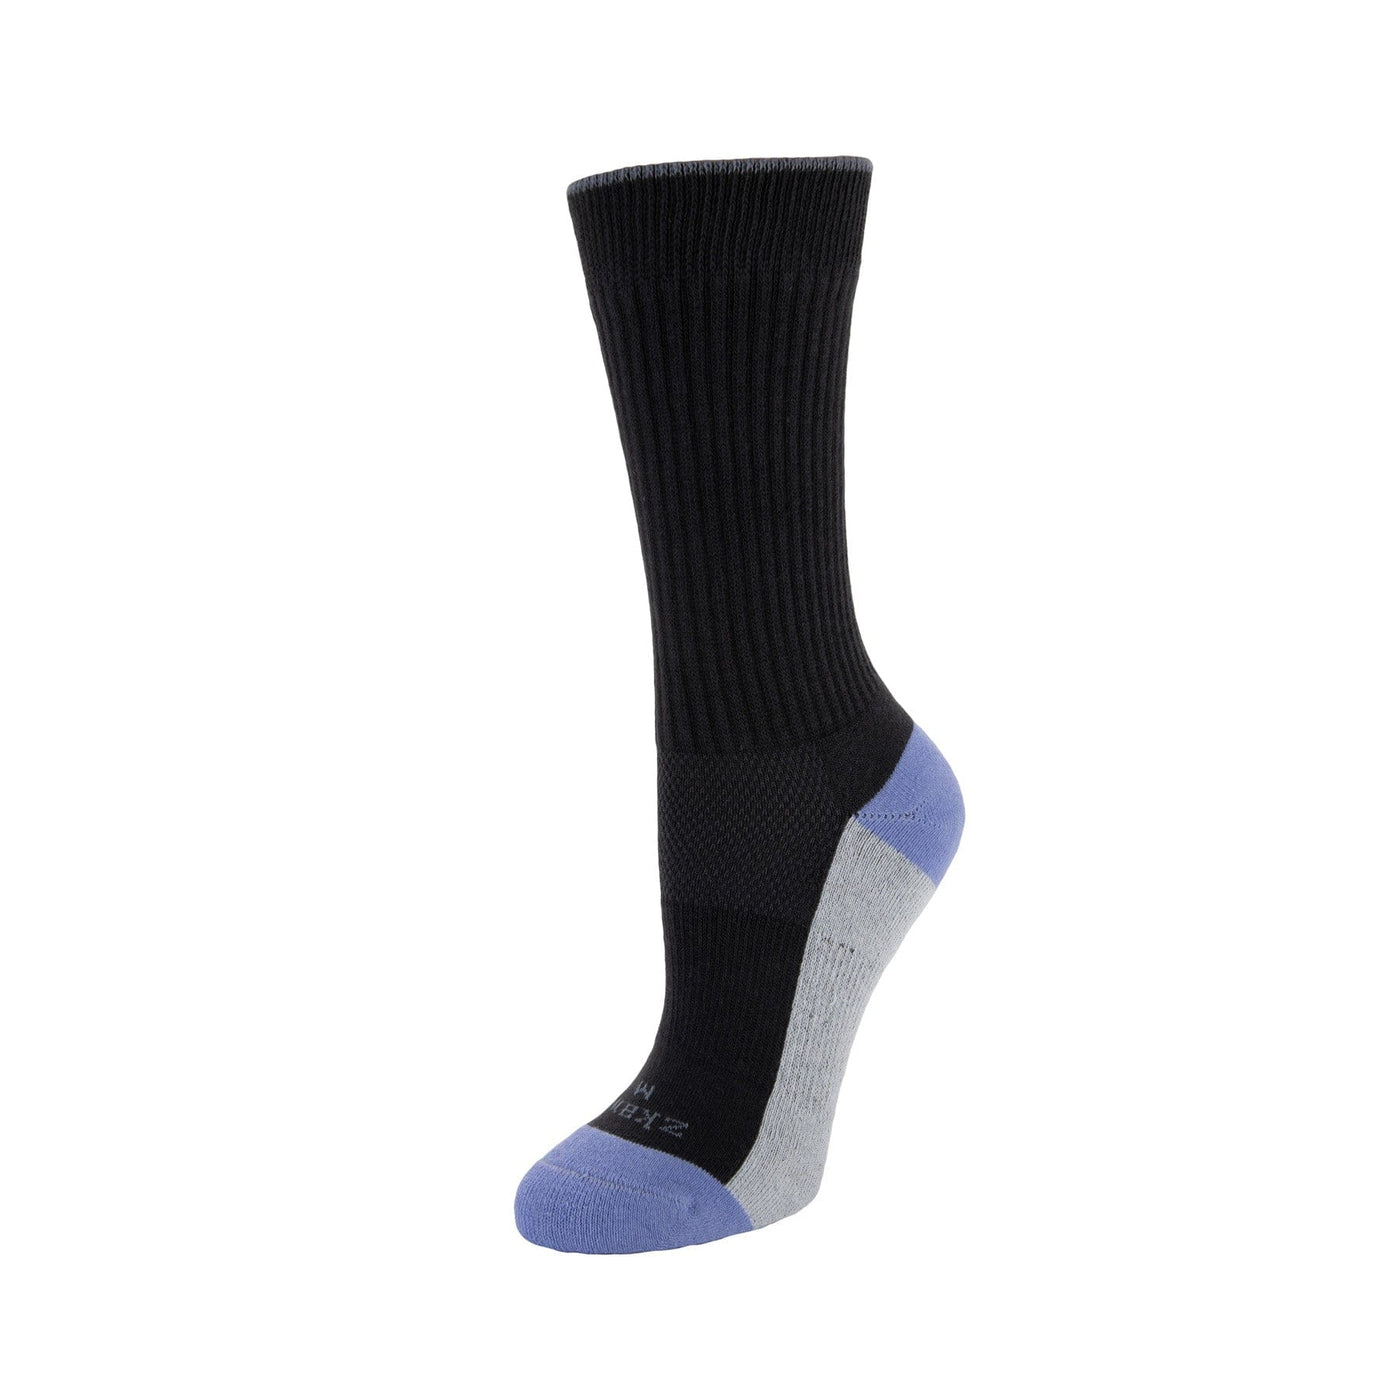 Zkano Basic & Sport Medium (wmns. shoe size 5.5 - 9.5) Summit - performance organic cotton crew socks - charcoal organic-socks-made-in-usa